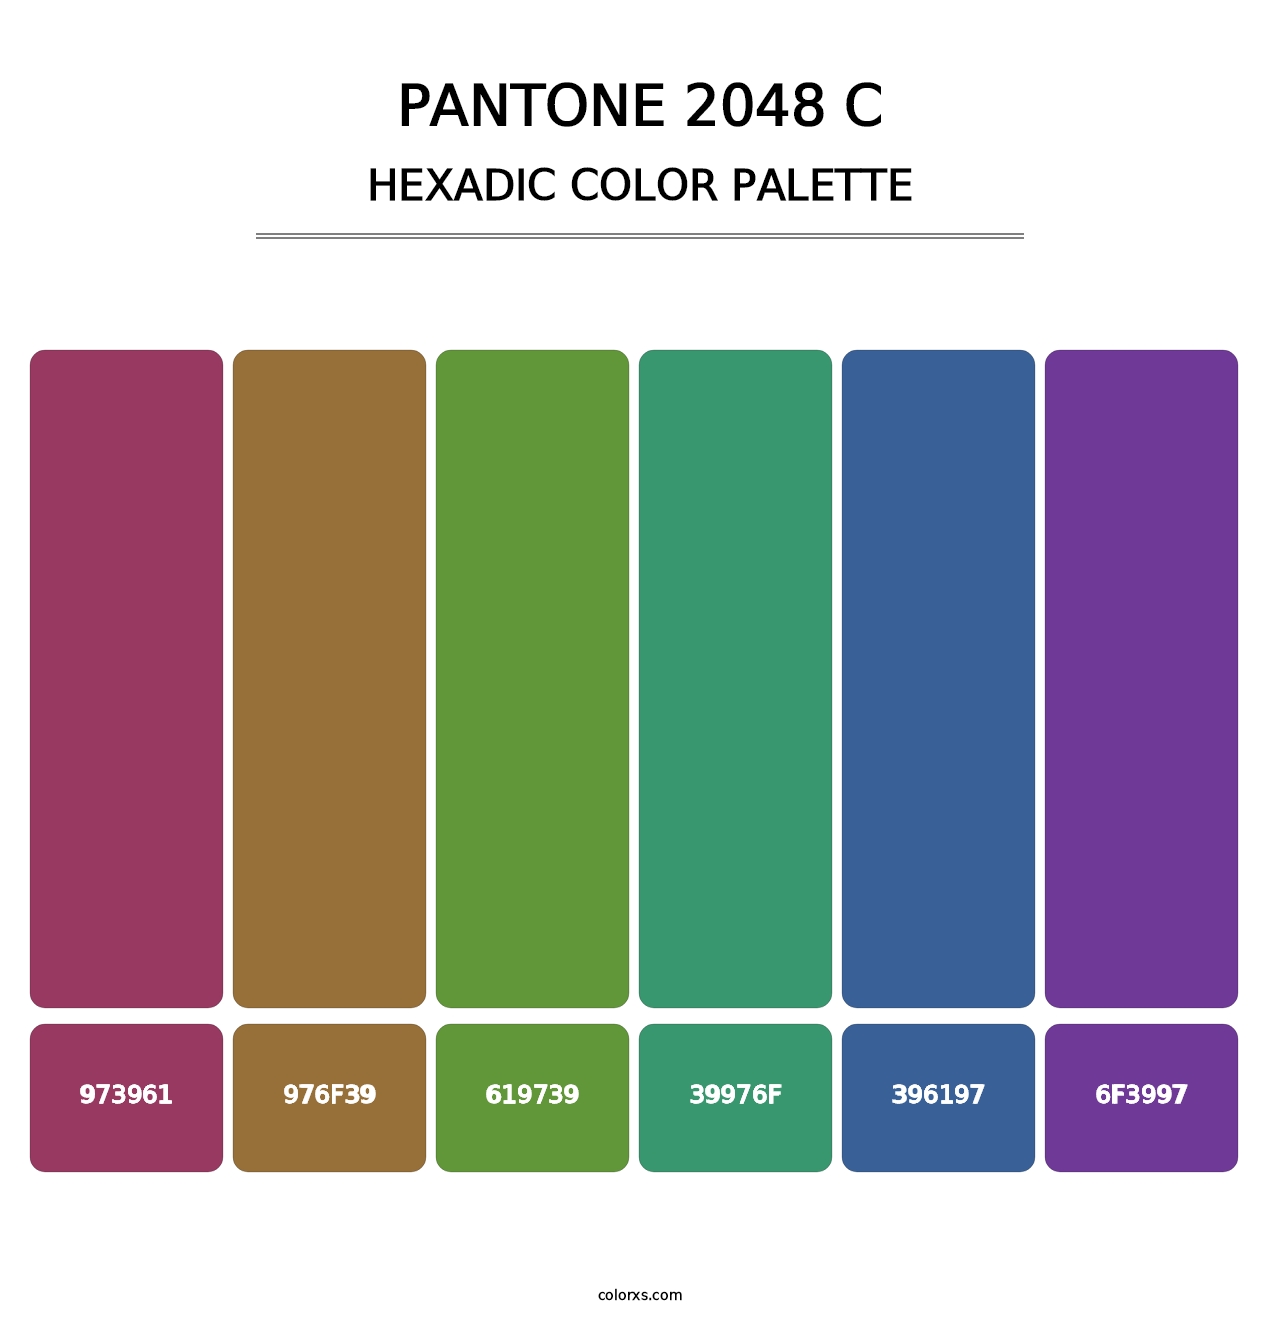 PANTONE 2048 C - Hexadic Color Palette